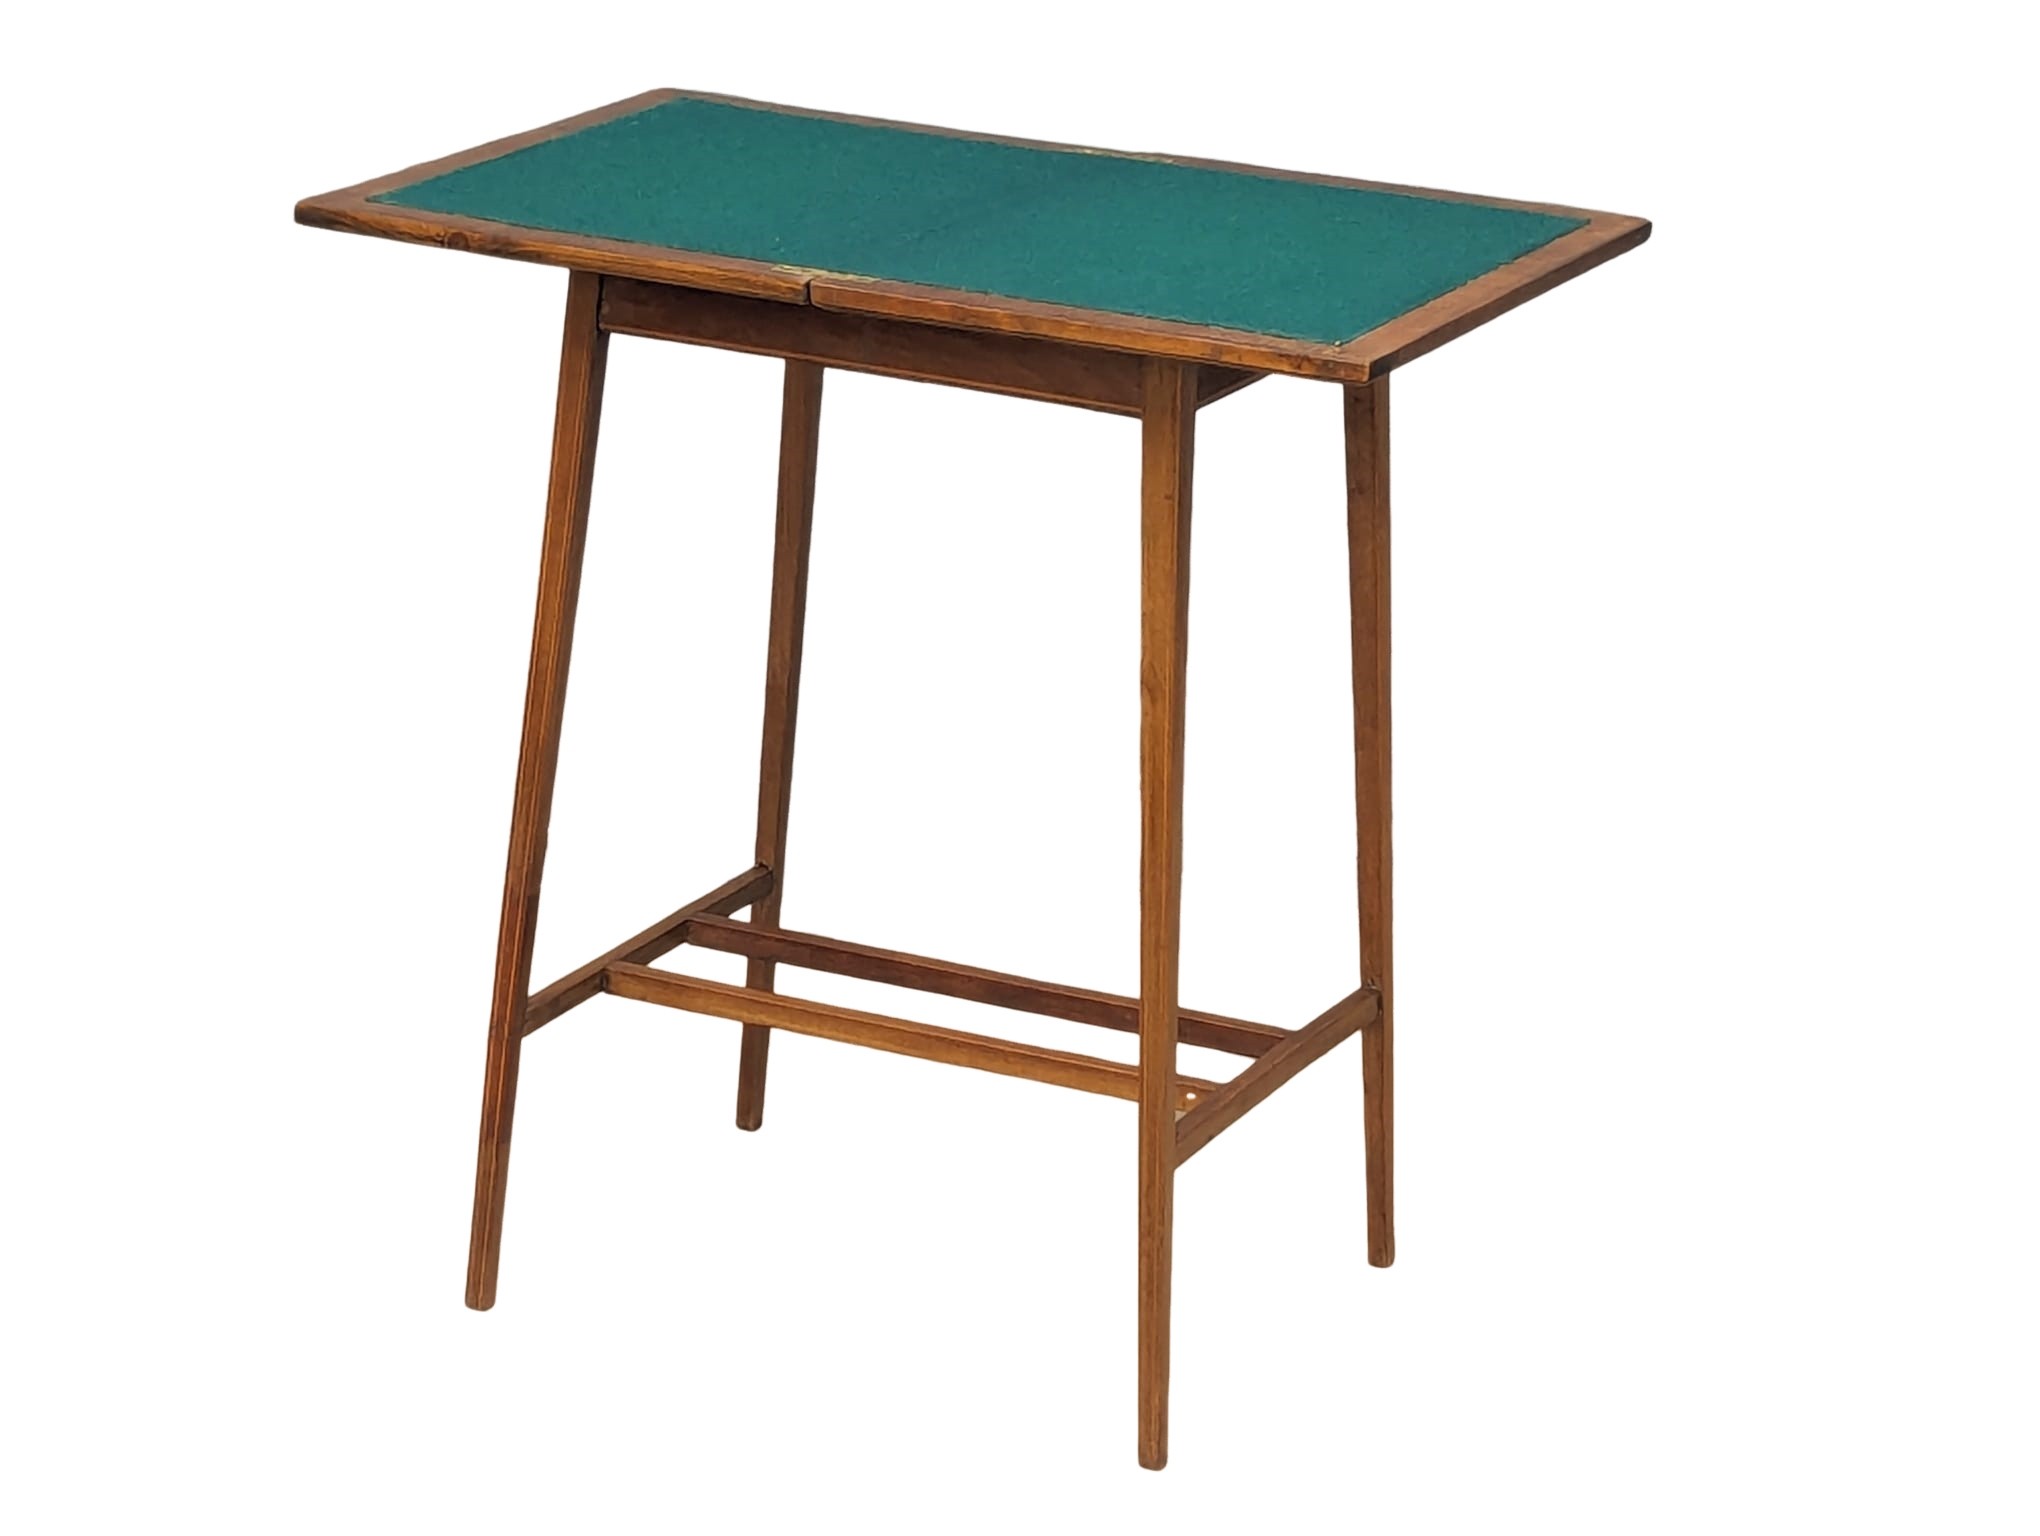 A Sheraton Revival inlaid mahogany turnover games table. Circa 1900. 46x35x73.5cm - Image 2 of 4